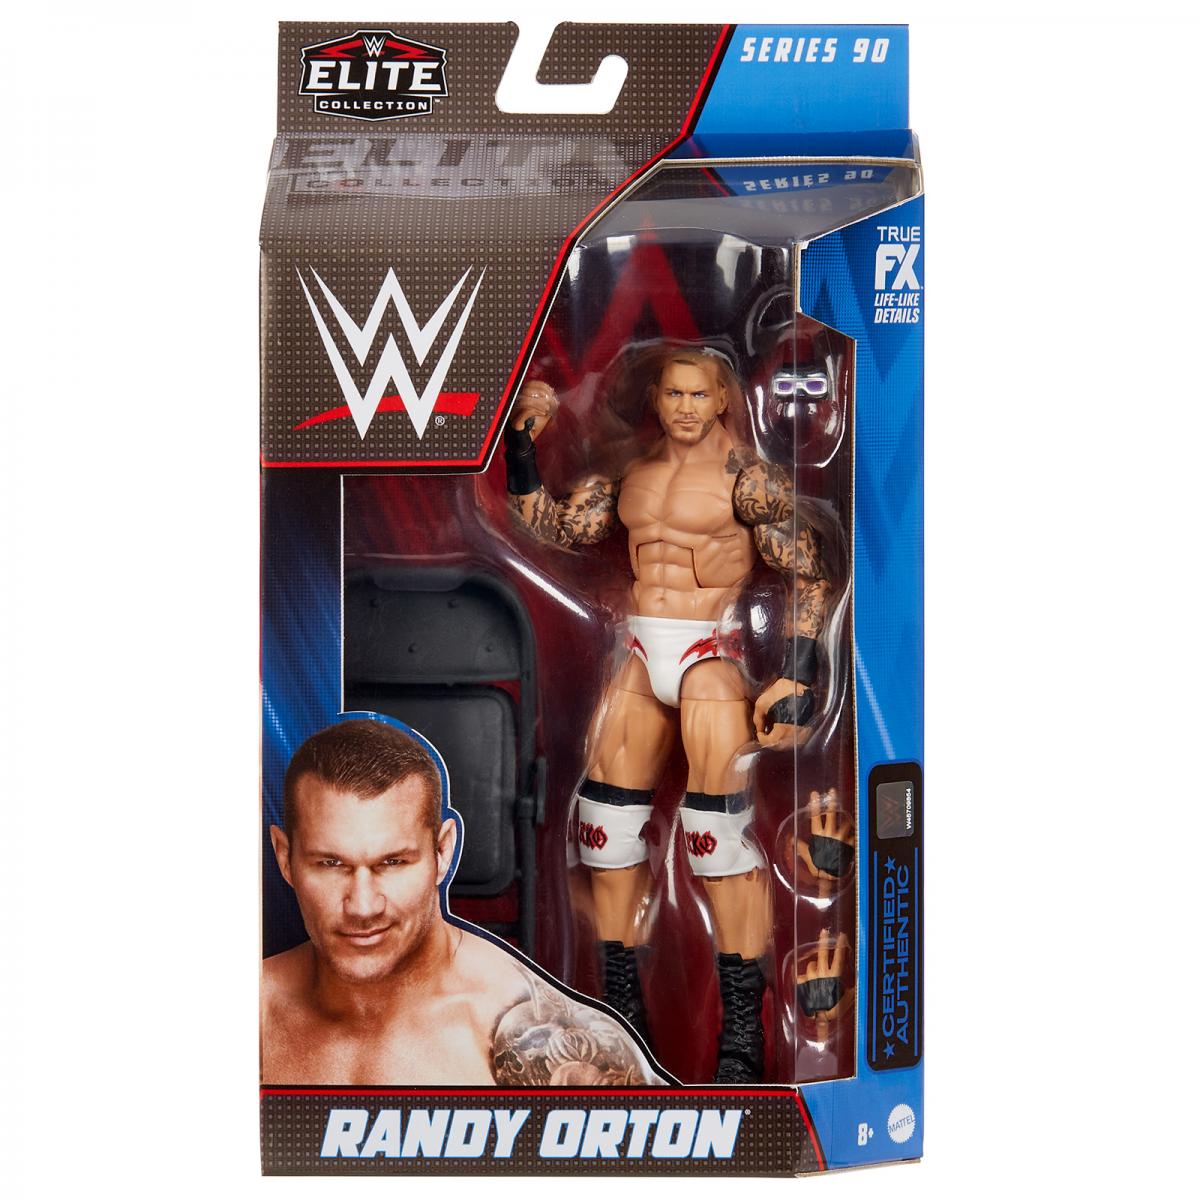 WWE Mattel Elite Collection Series 90 Randy Orton